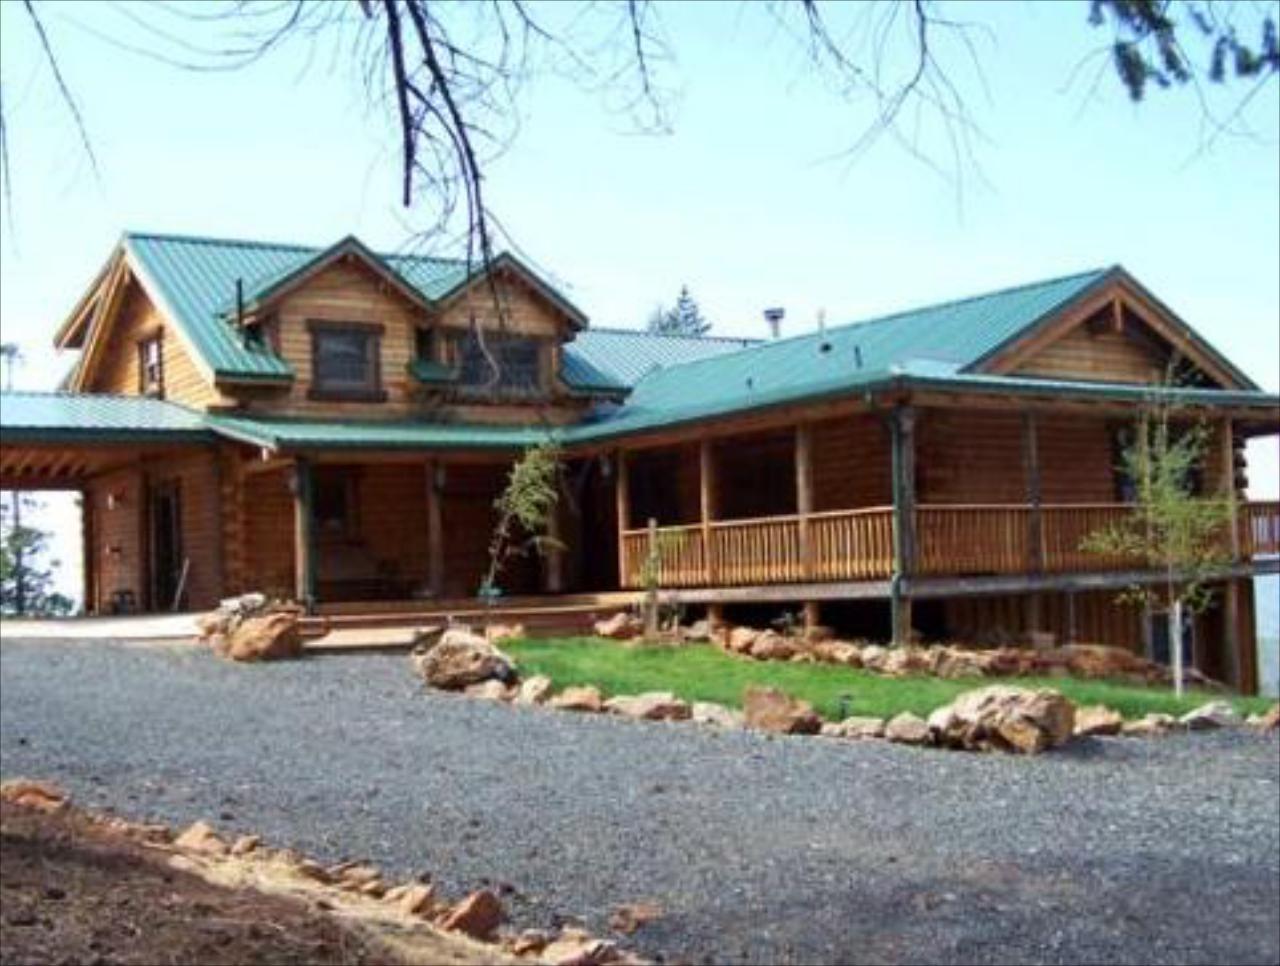 Lillaskog Lodge